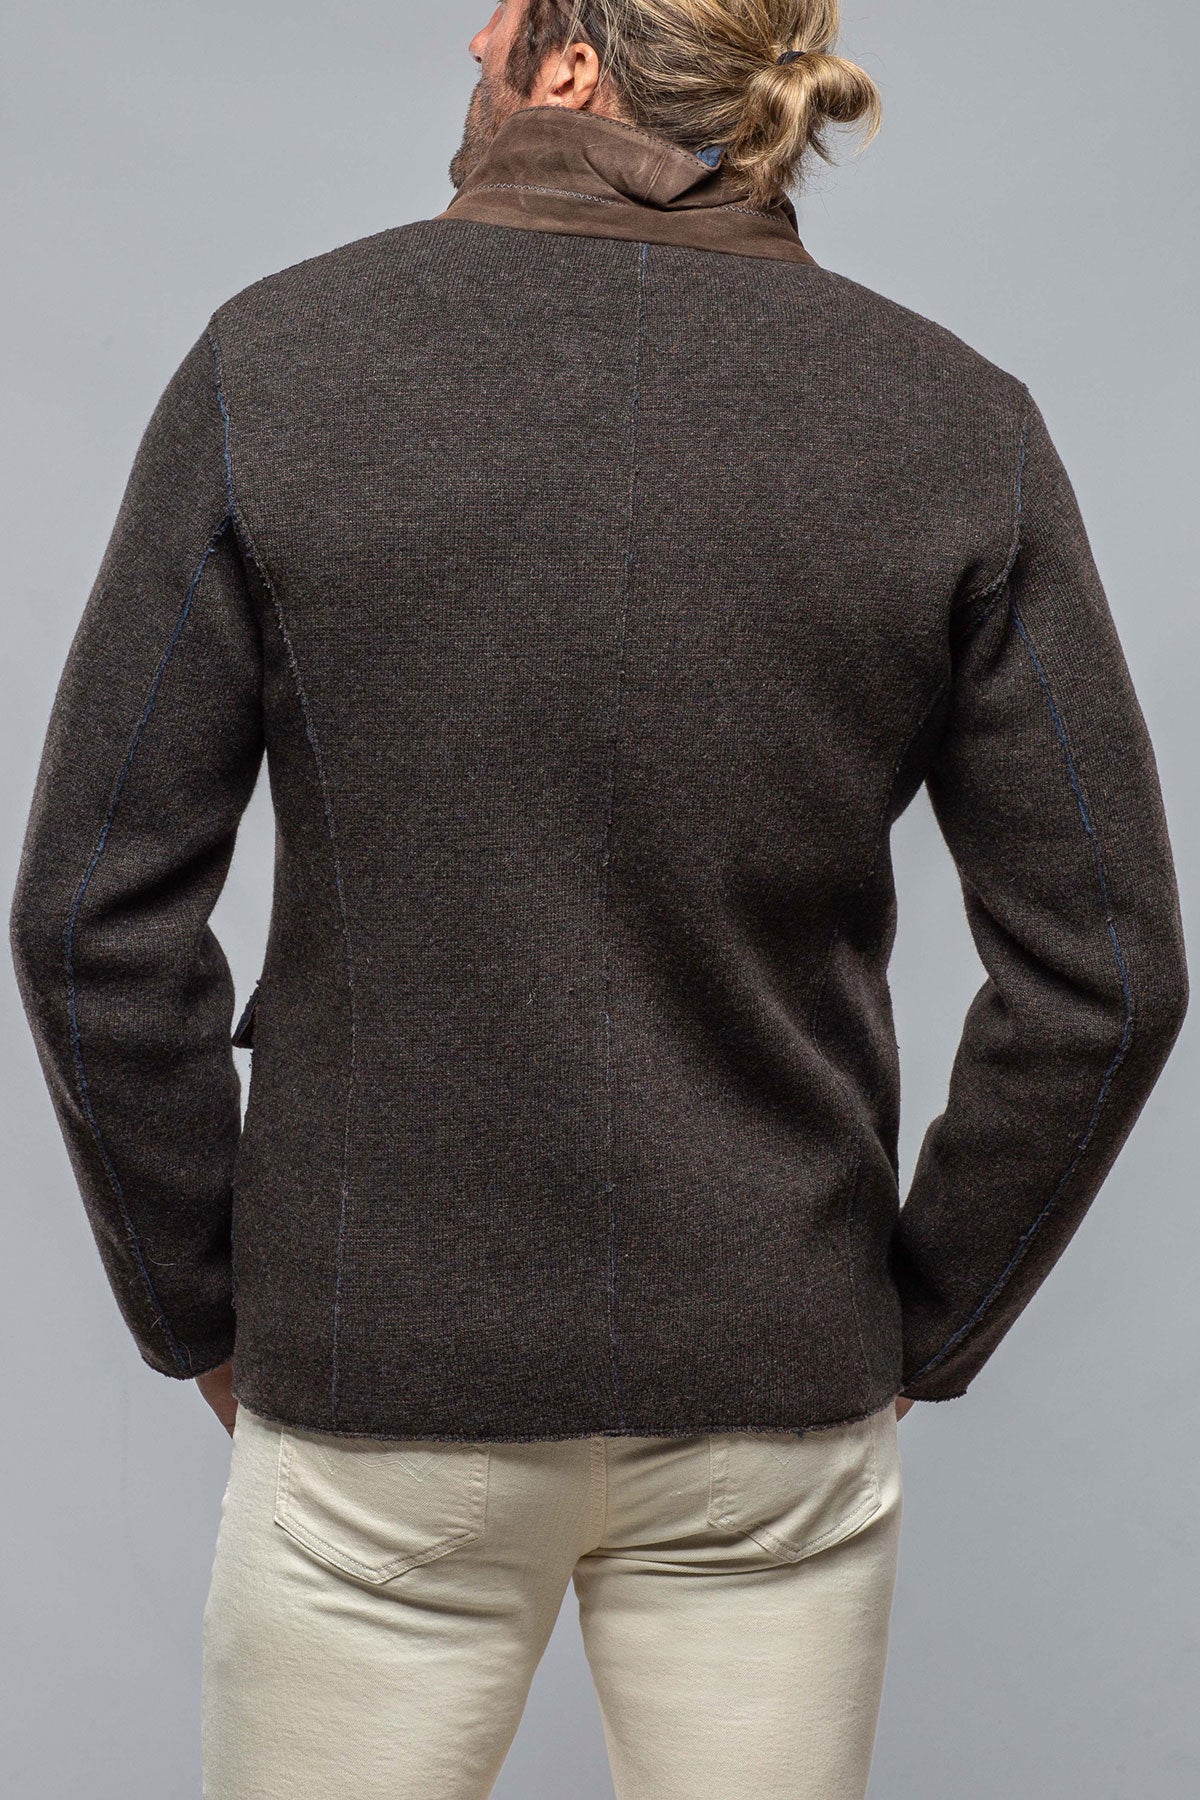 Rutland Sweater Jacket | Warehouse - Mens - Outerwear - Cloth | Gimo's